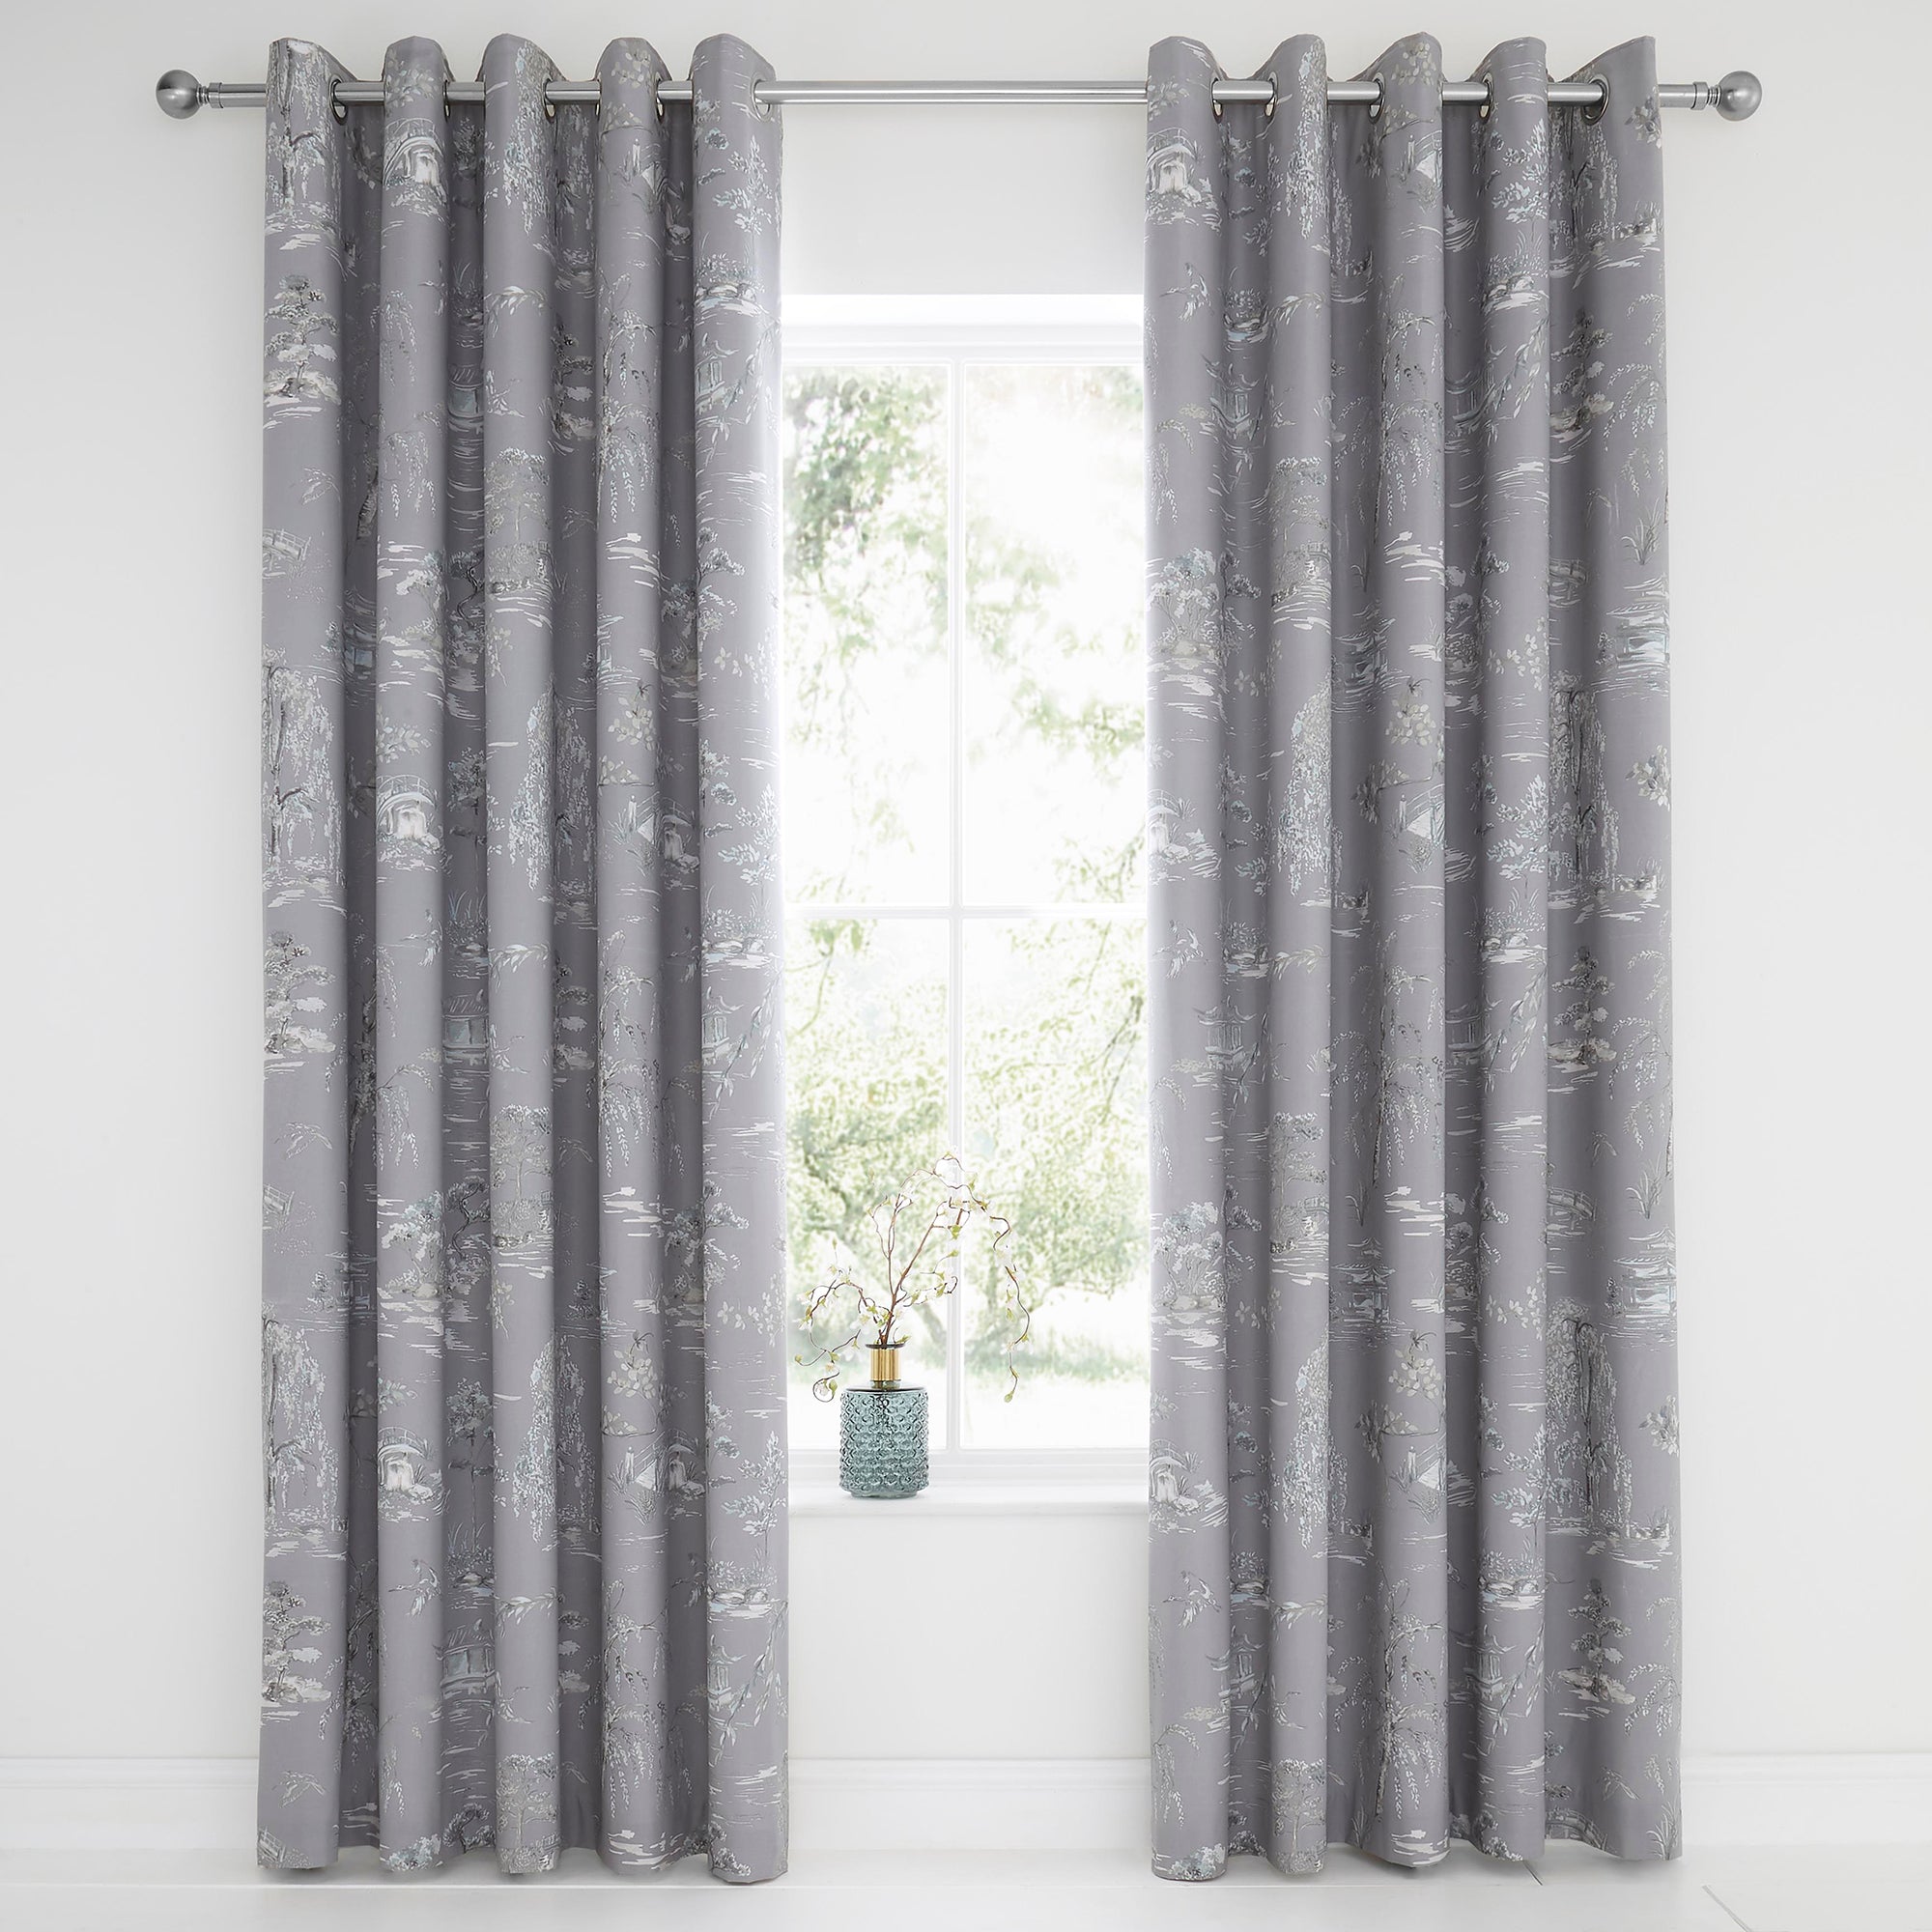 Pair of Eyelet Curtains Oriental Garden by D&D Design in Grey